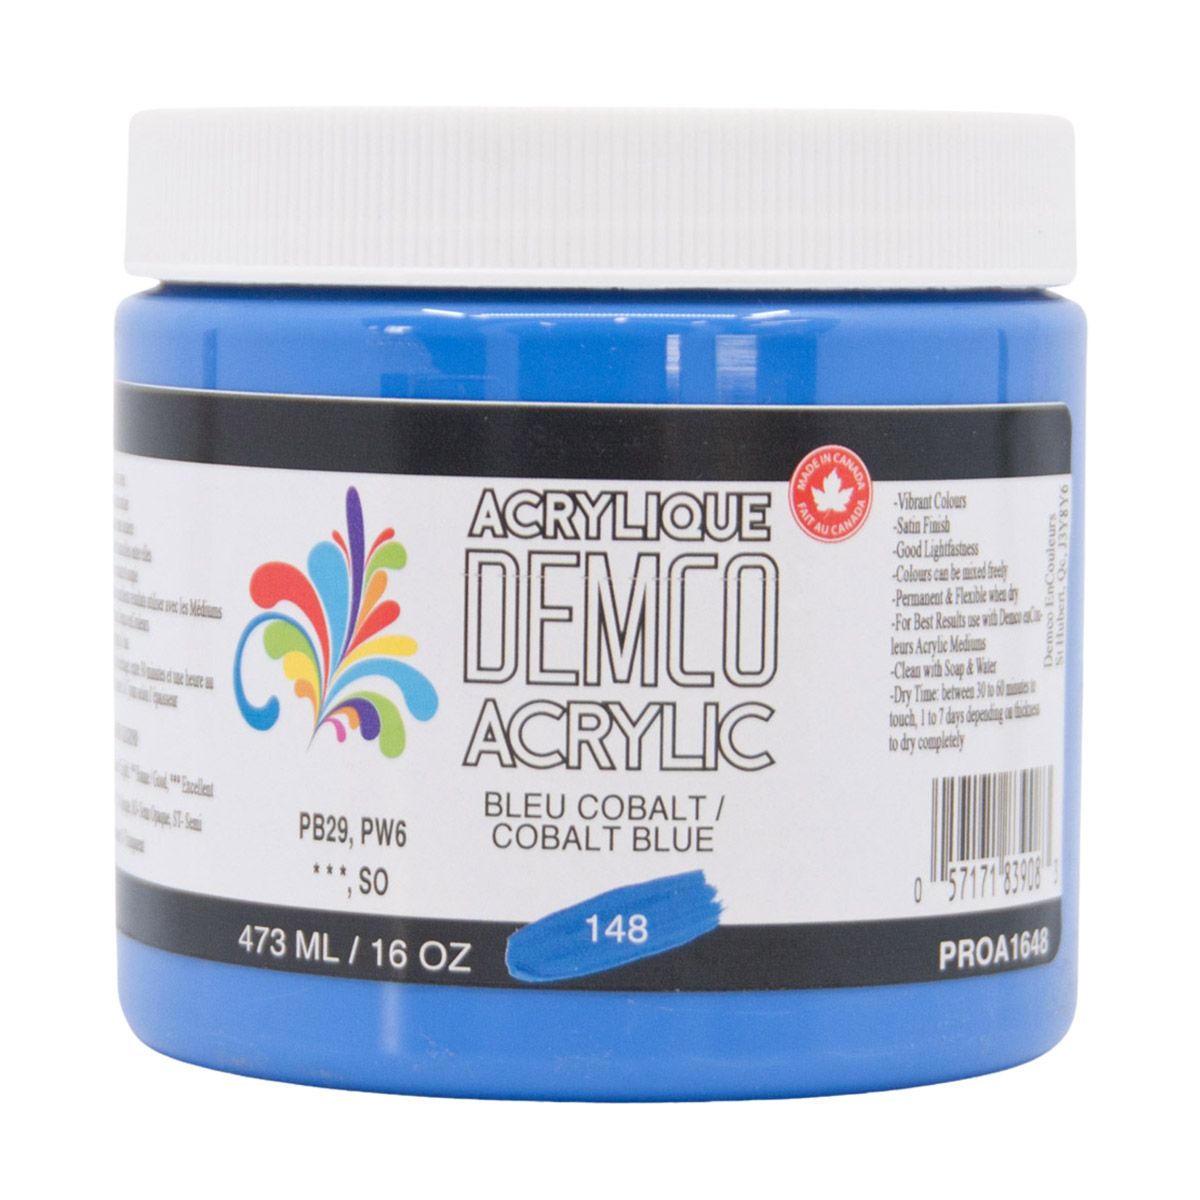 Demco Acrylic Cobalt Blue 473ml/16oz